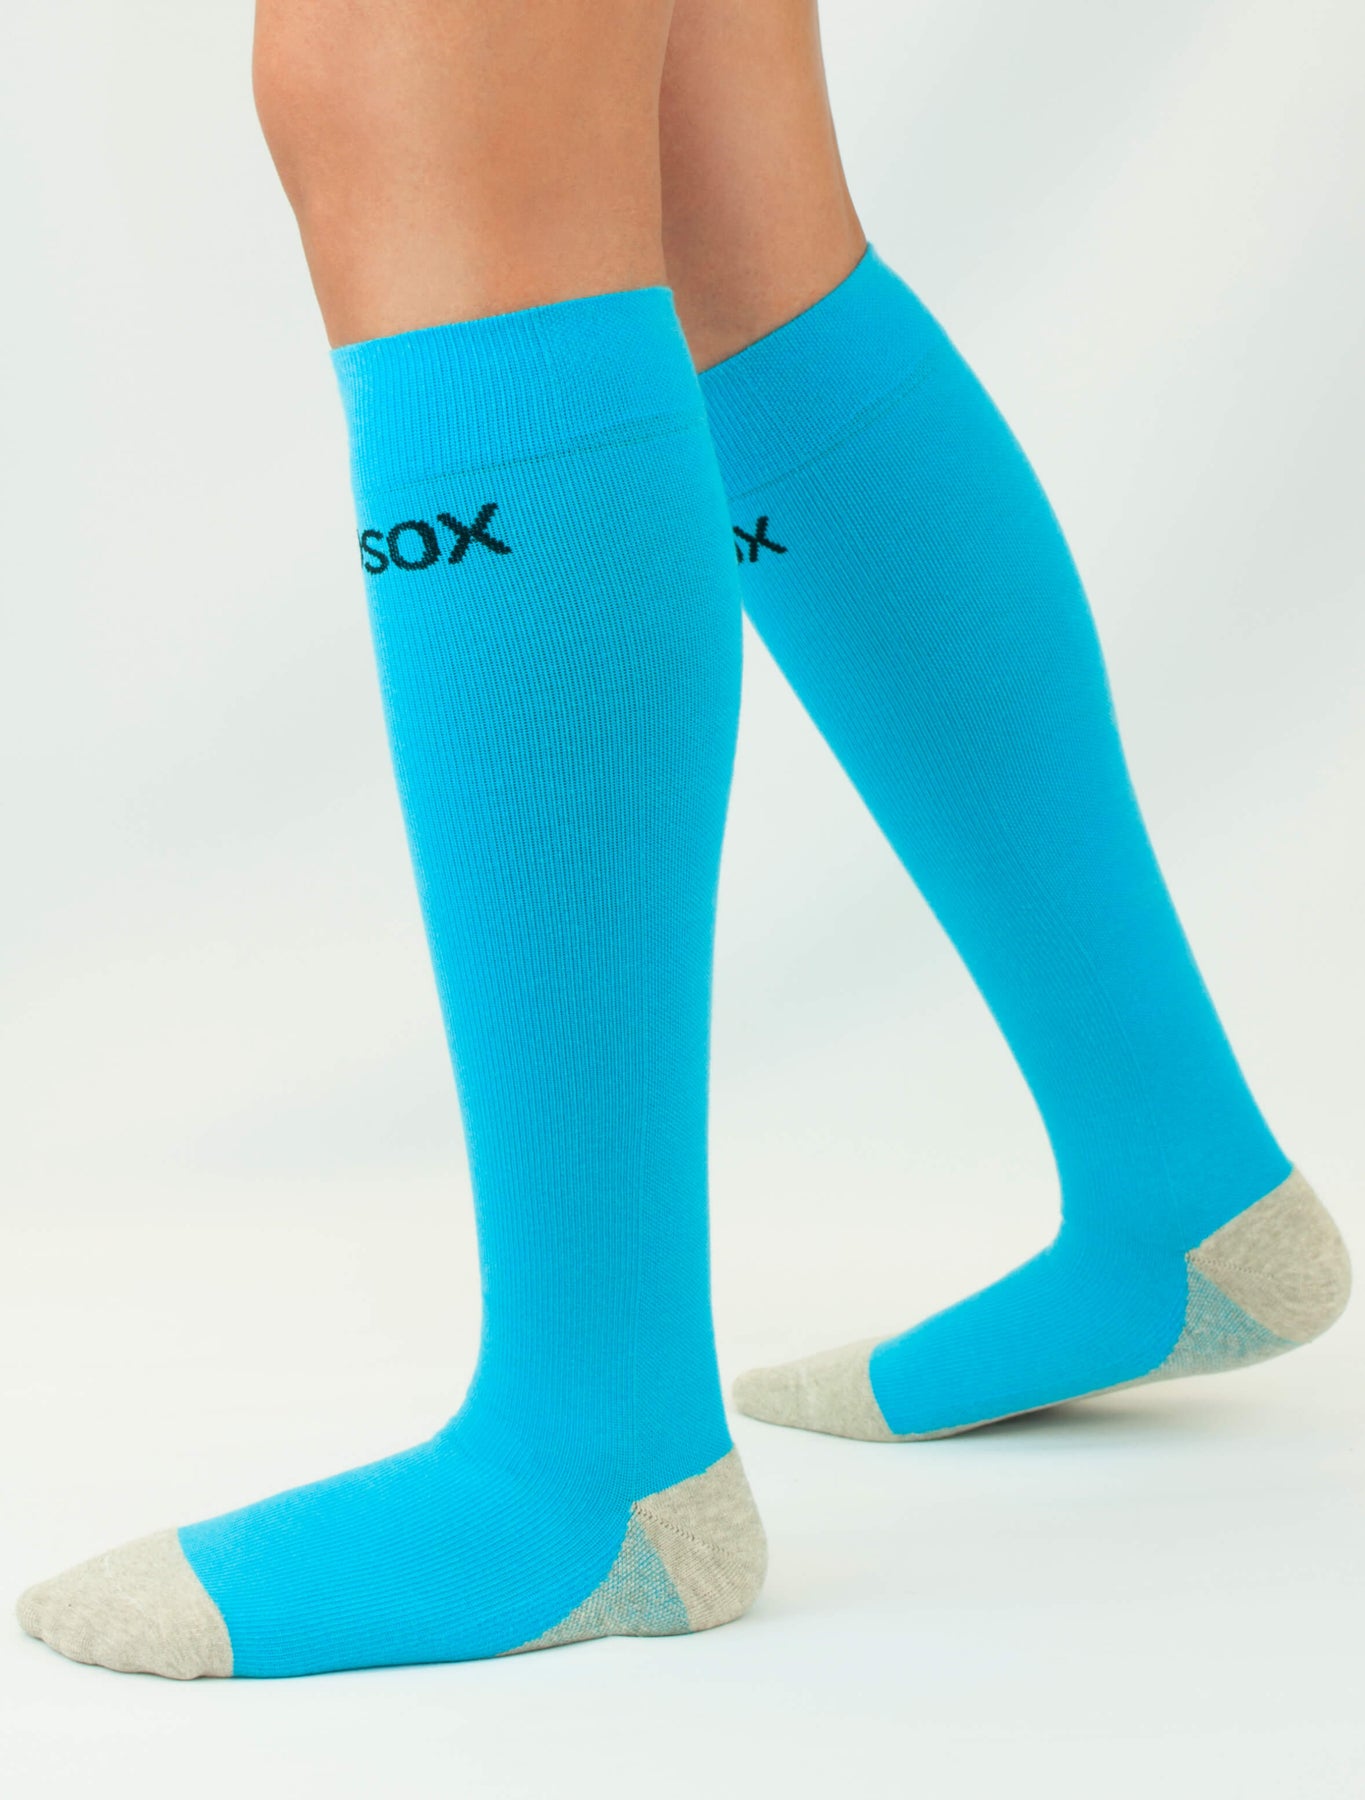 Compression Socks (Non-Medical Grade) - Priontex